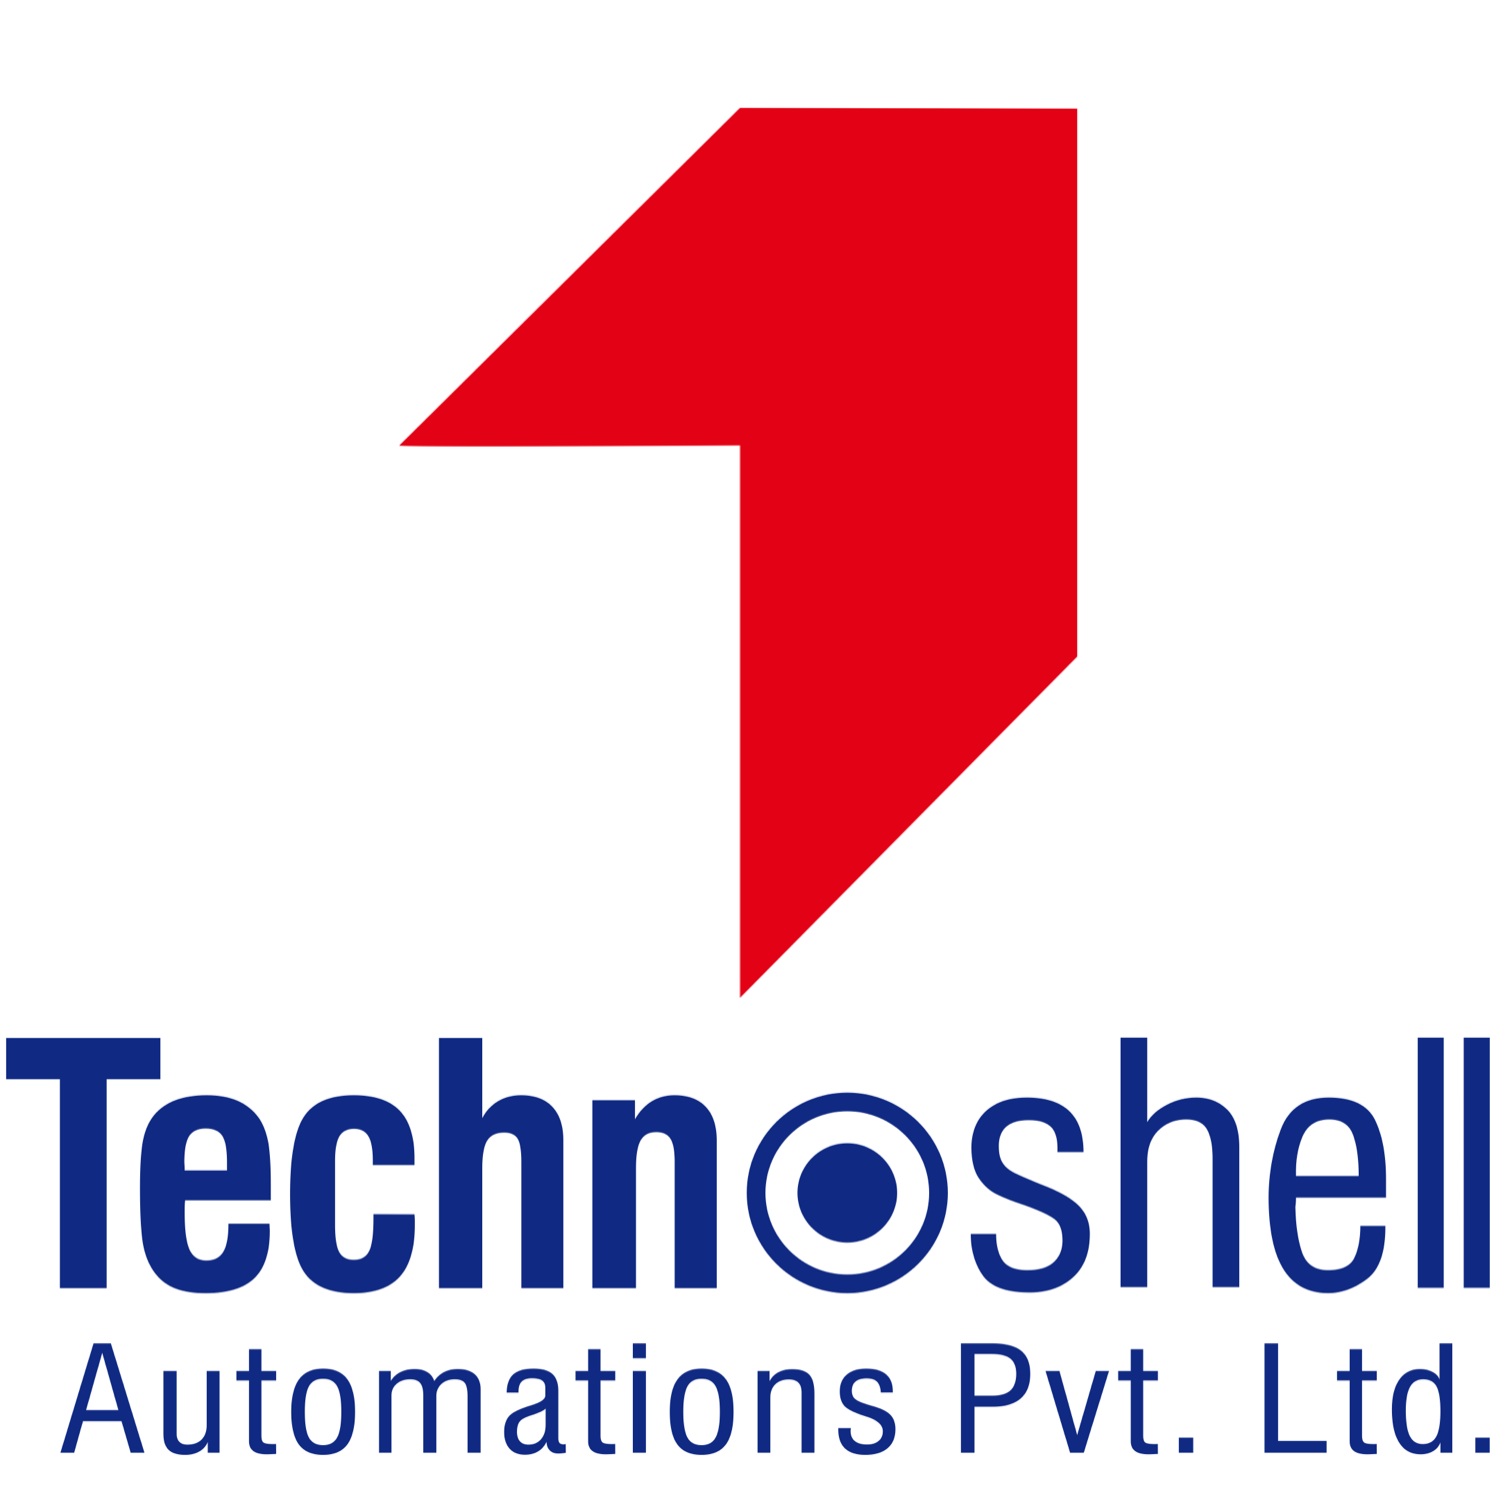 Technoshell Automations Pvt. Ltd.